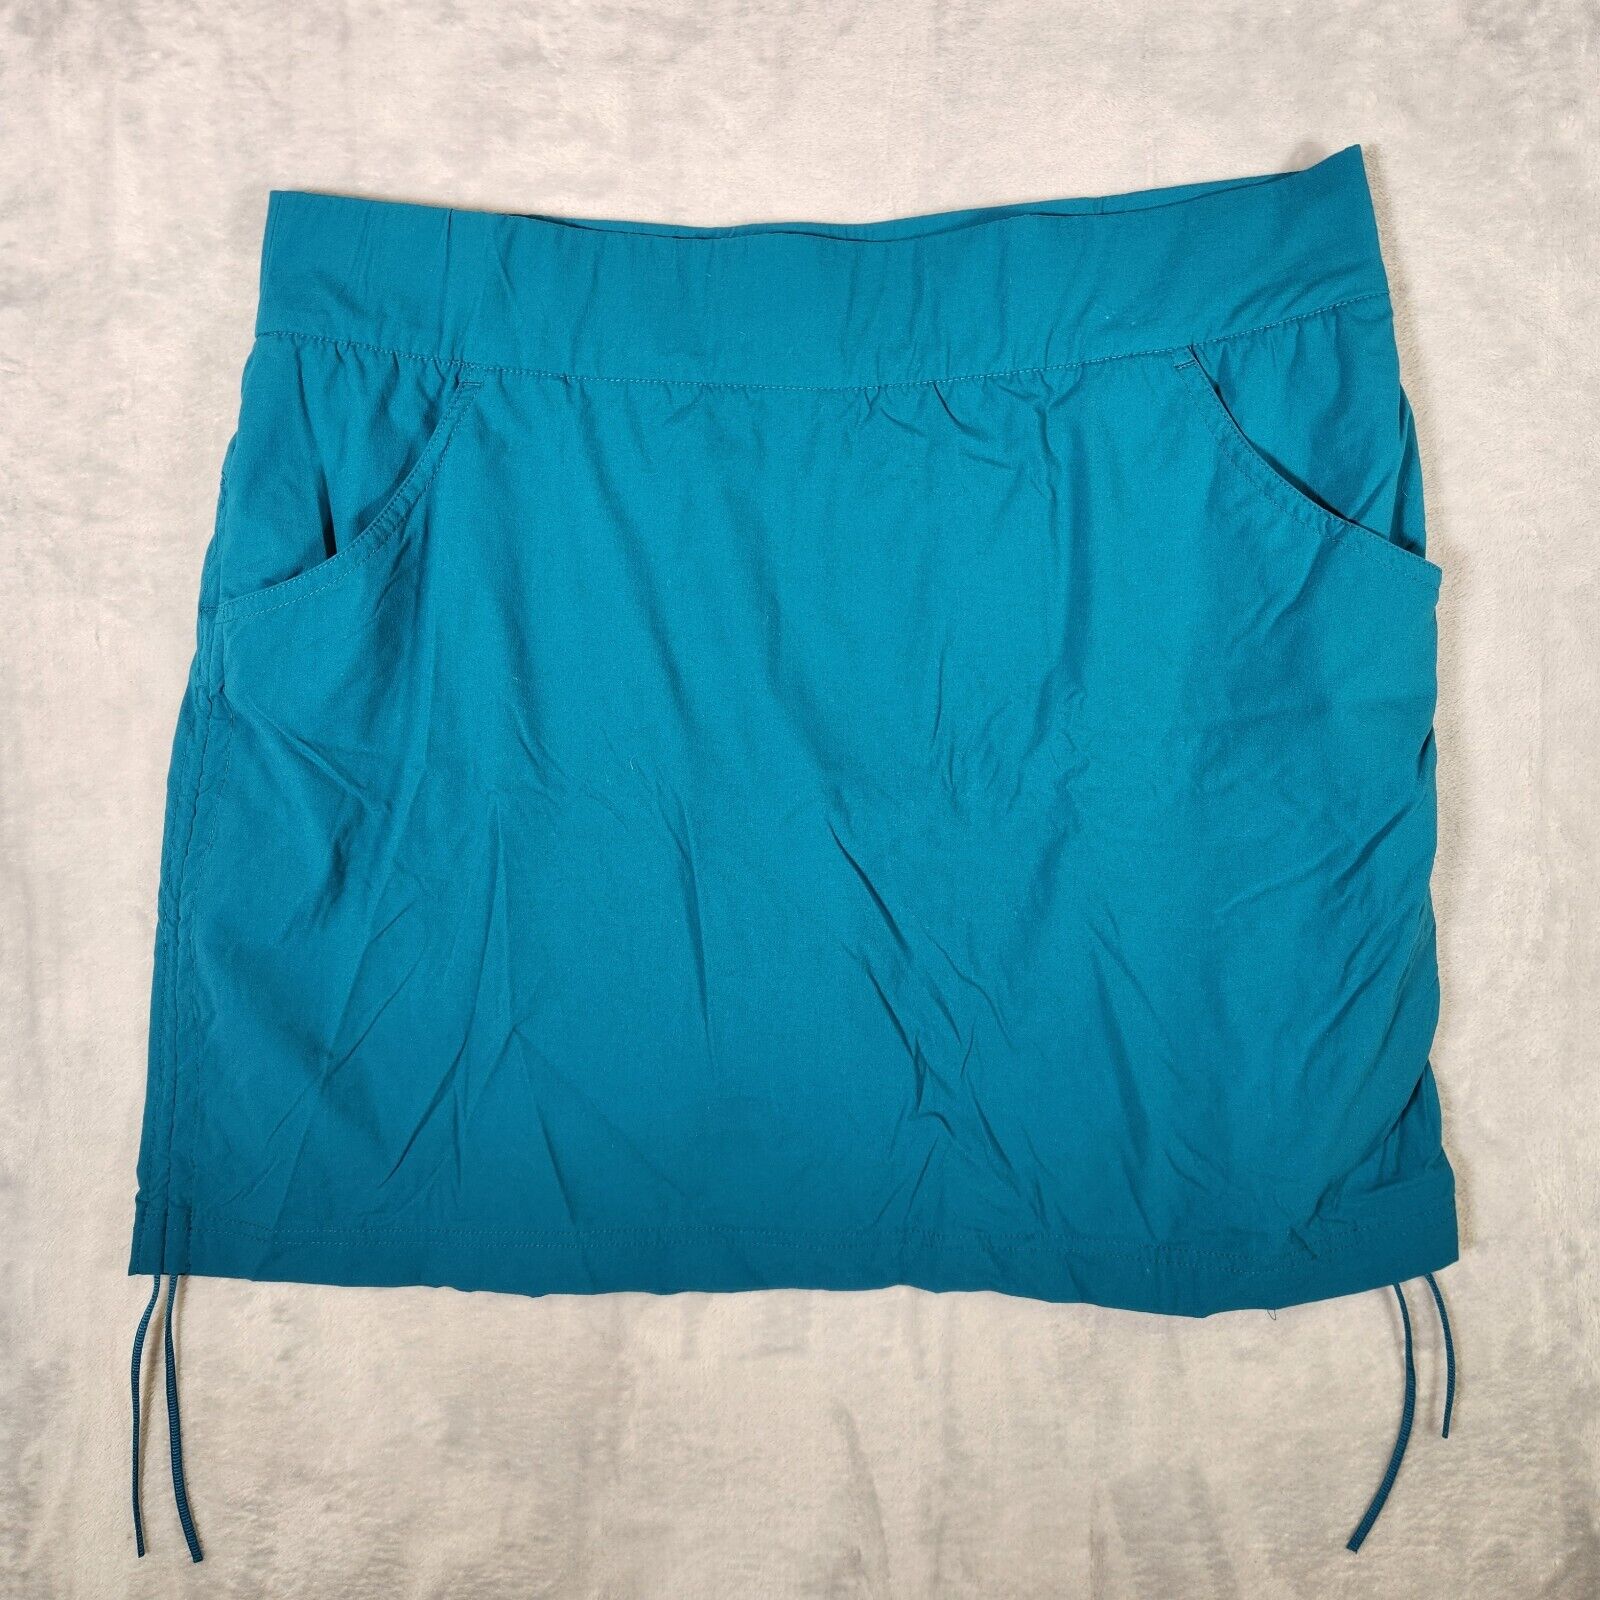 Columbia Skort Womens XL Blue Short Lined Skirt Athletic Hike Travel Gorpcore